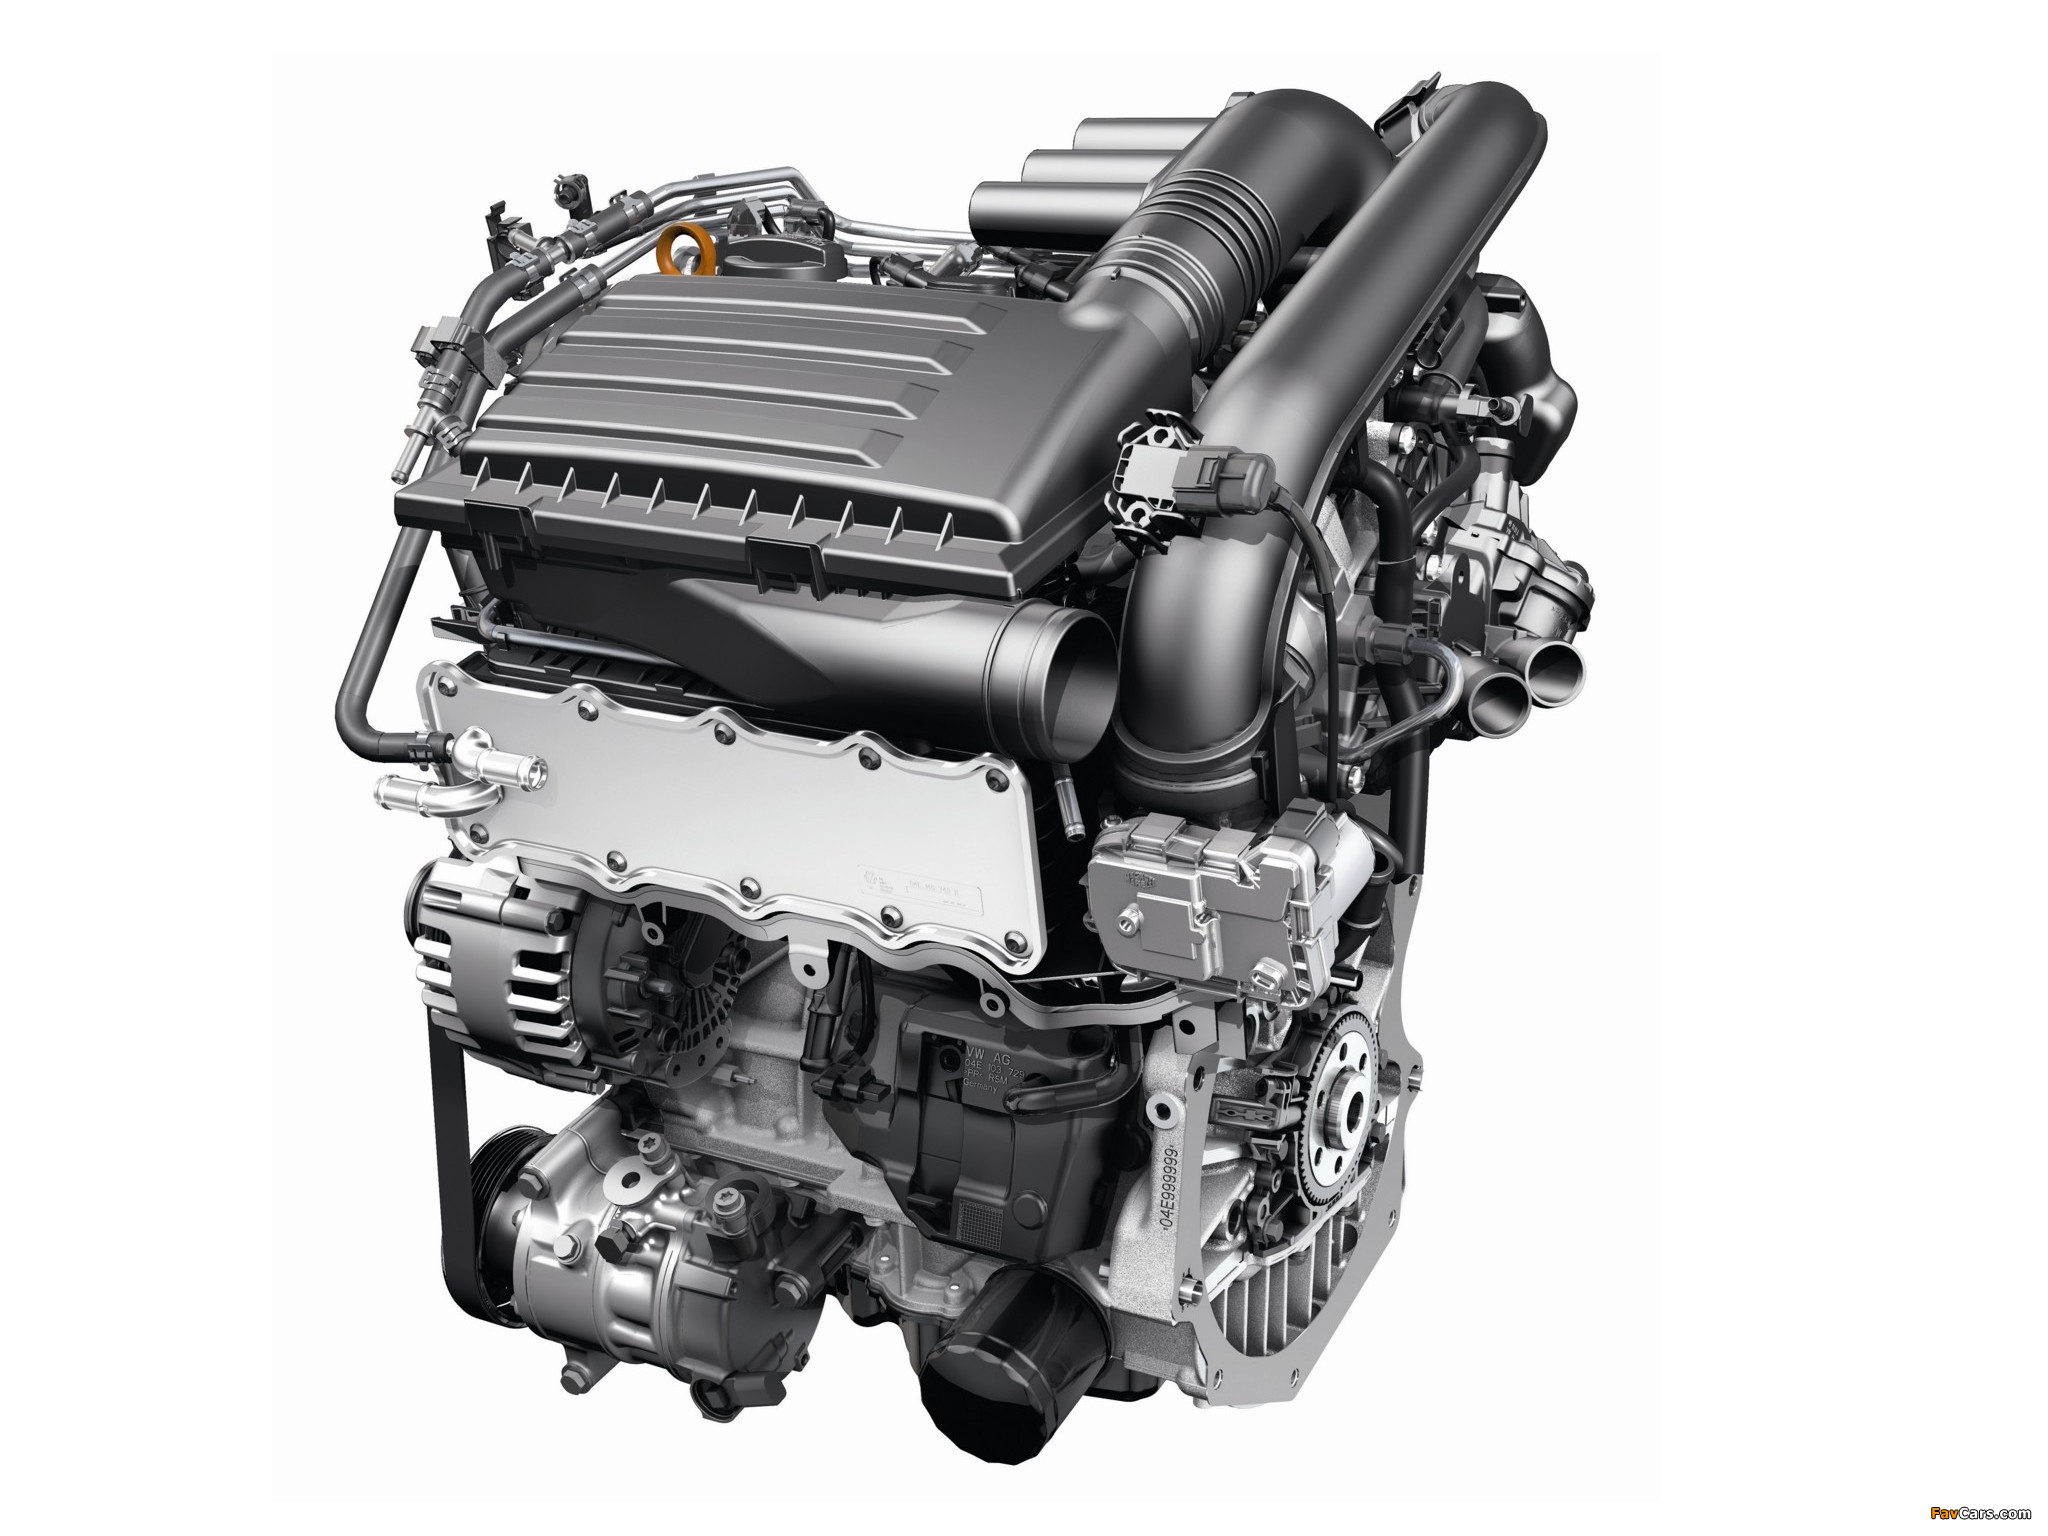 Tsi двигатель ремонт. Двигатель ea211 1.4 TSI. Двигатель 1.2 TSI 110л. Двигатель Фольксваген 1.4 TSI. Двигатель Шкода 1.4 TSI.